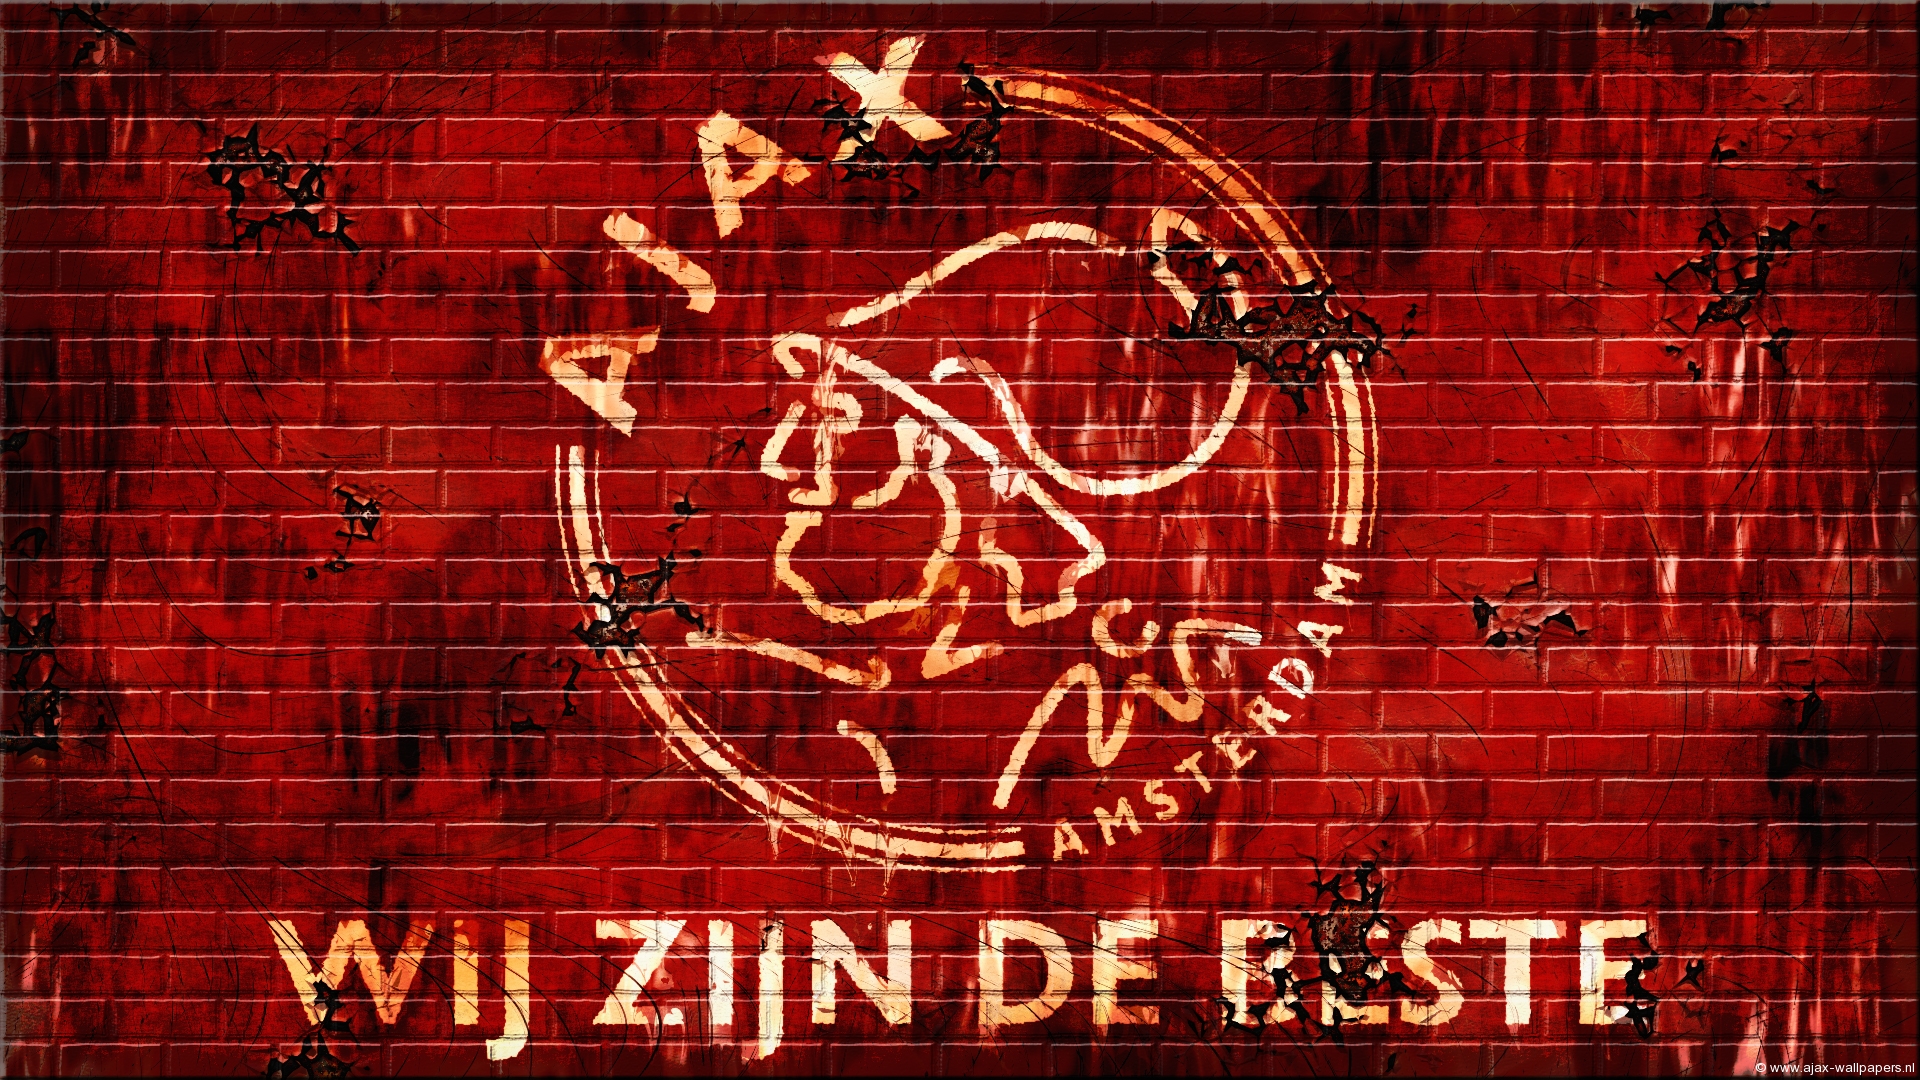 afc ajax, sports, emblem, logo, soccer